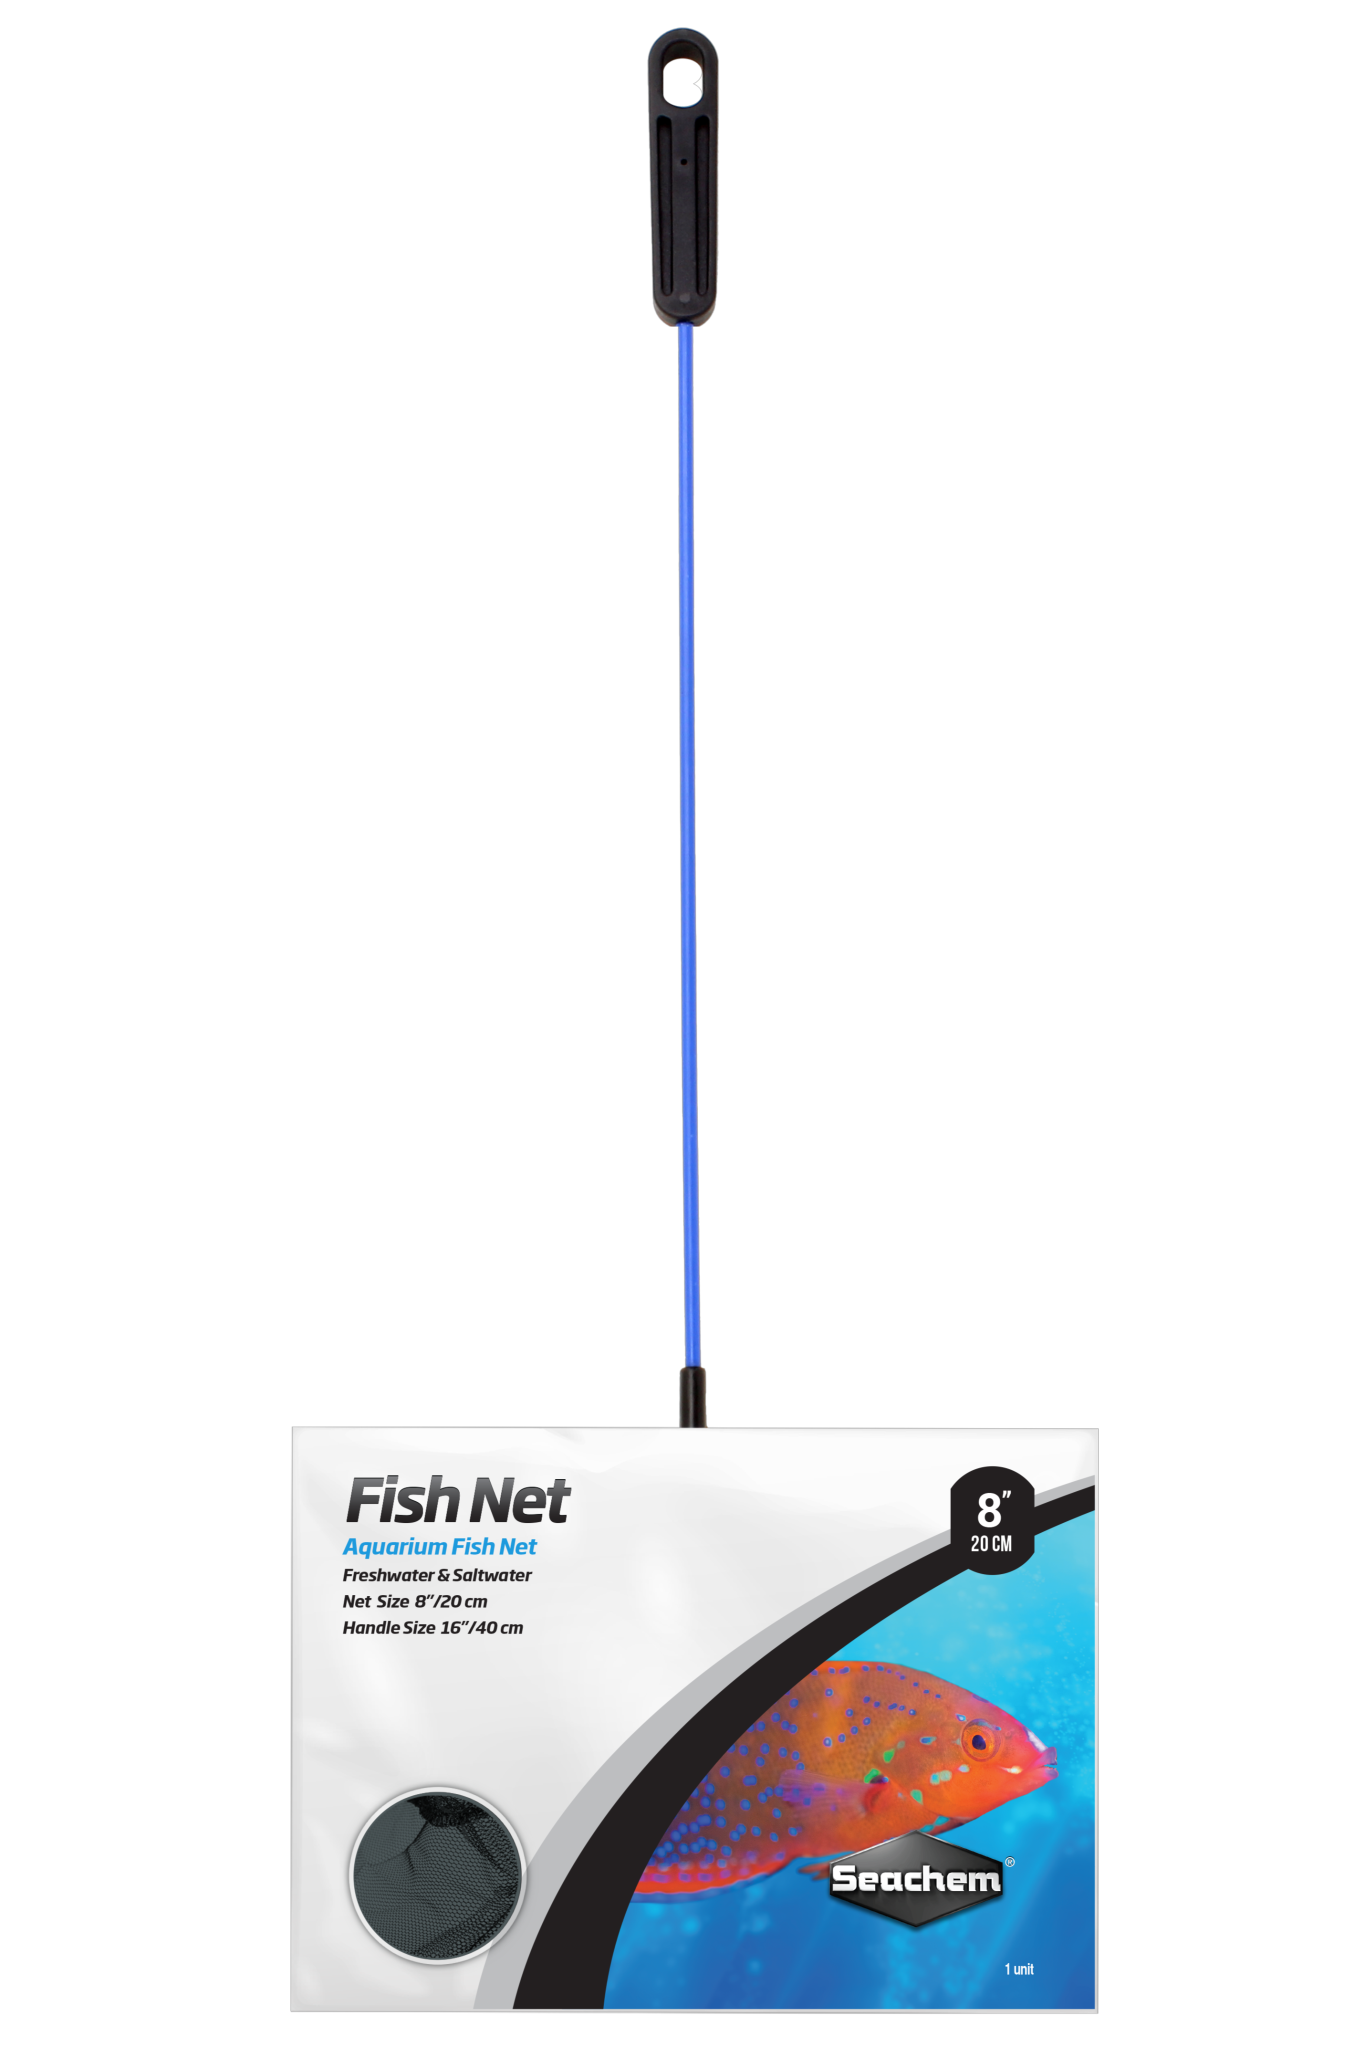 Seachem Fish Net 20cm/8in Long Handle